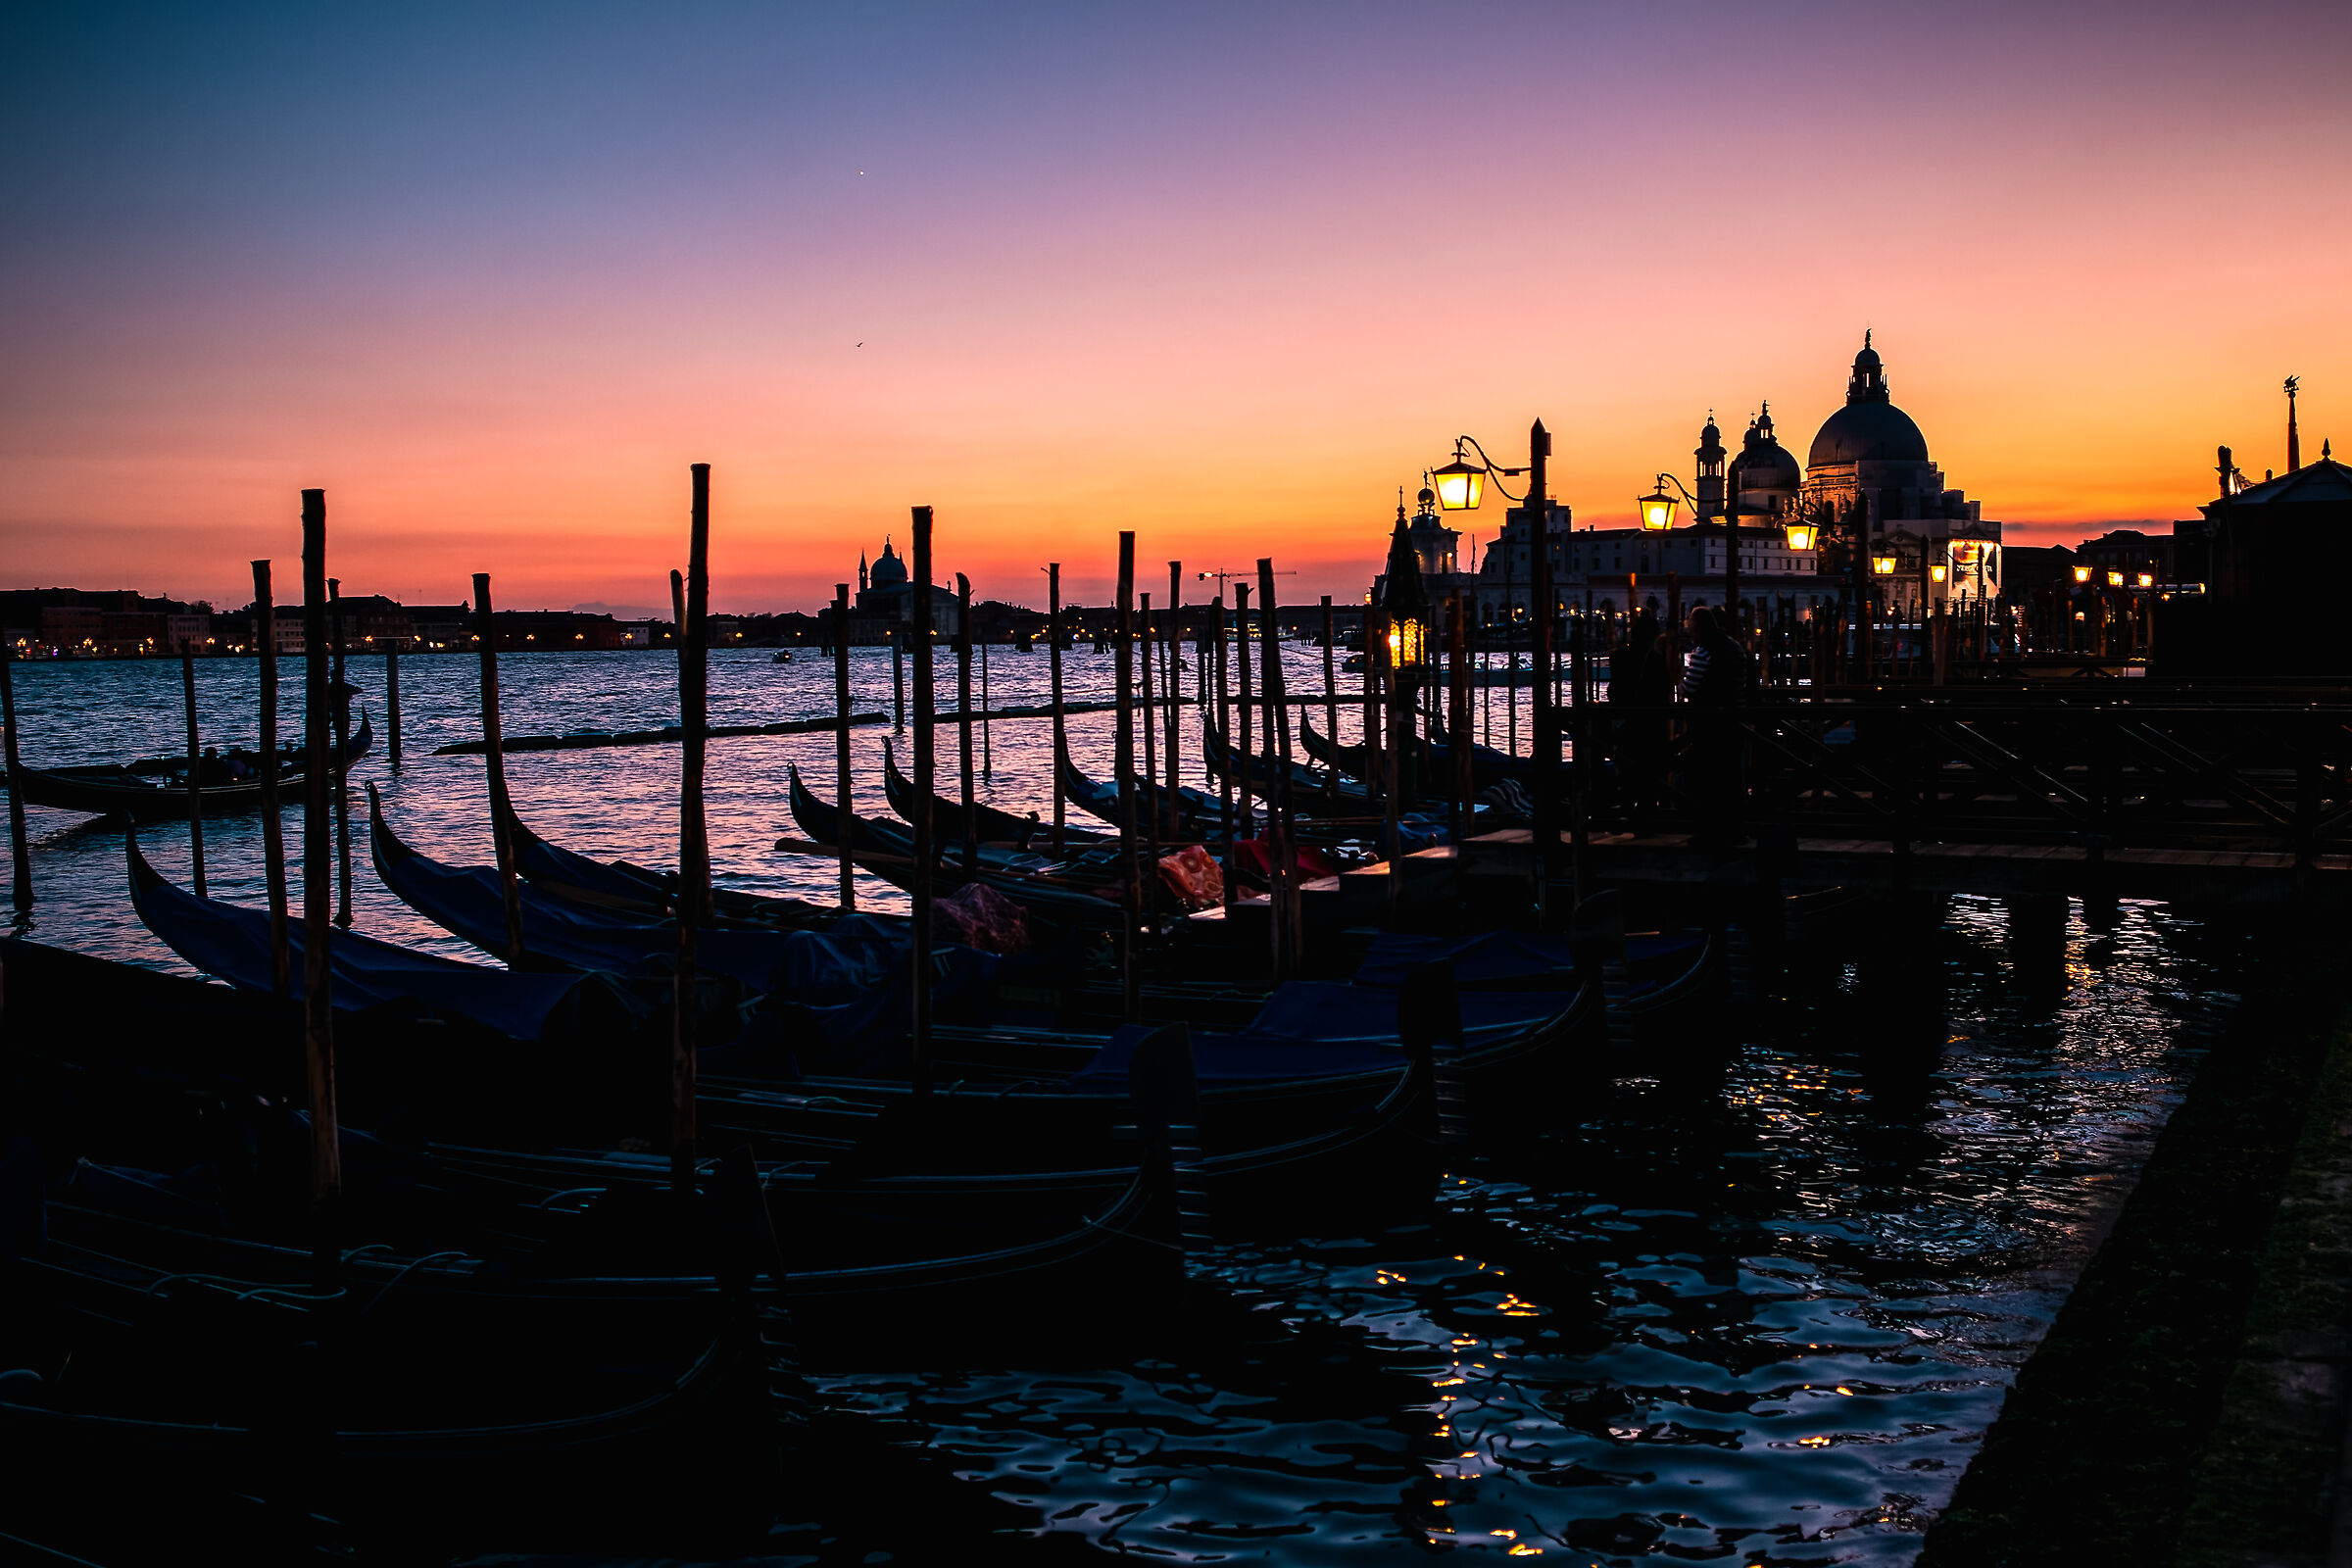 Sunset in Venice...